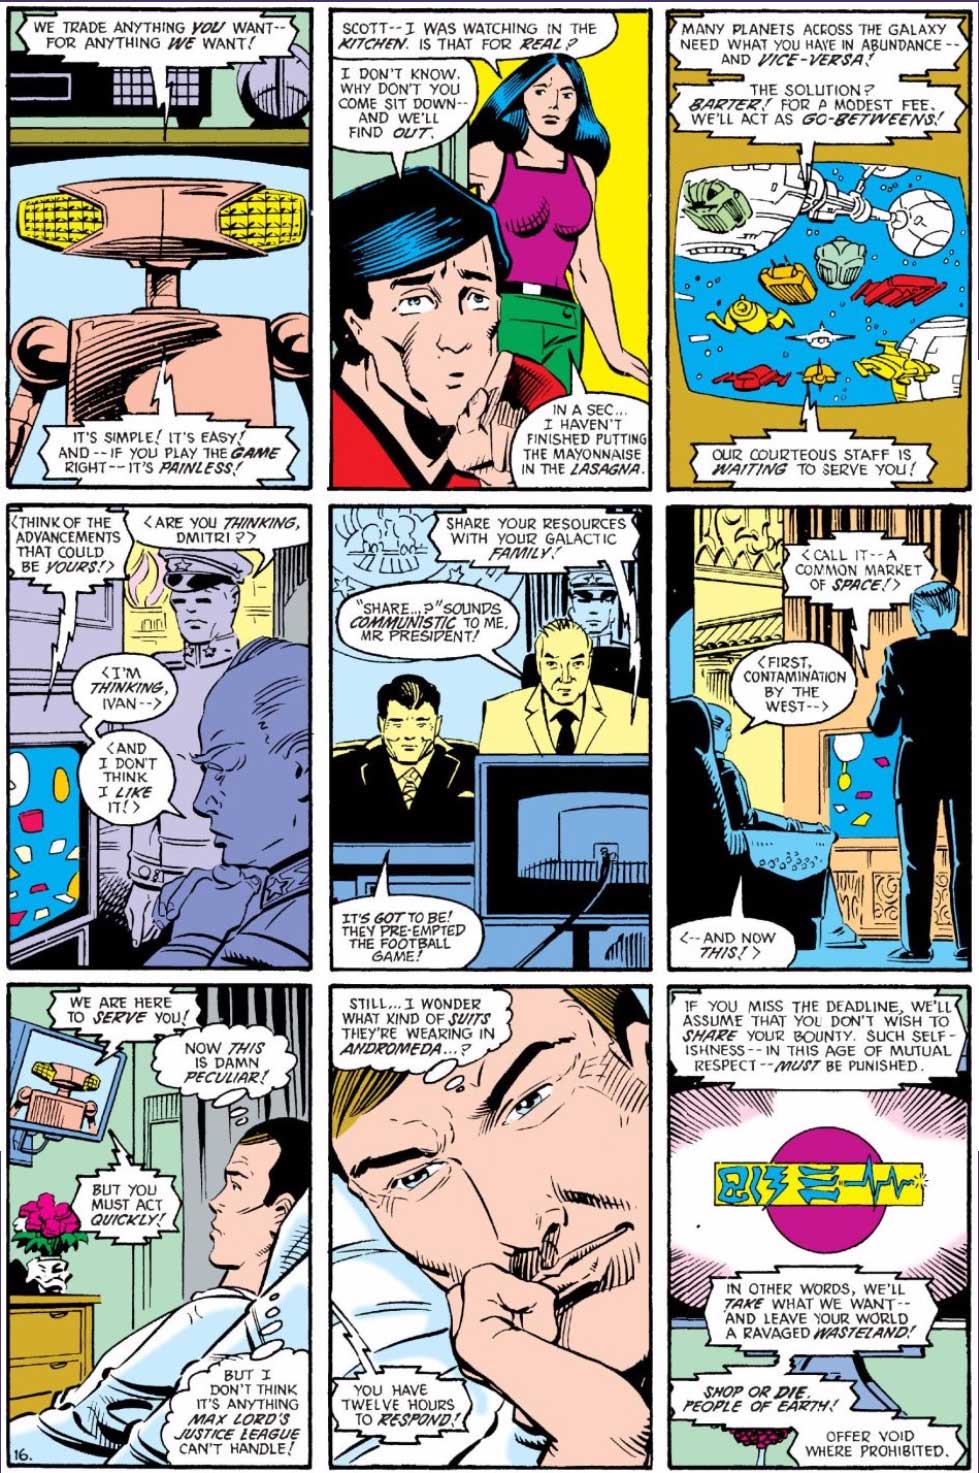 Justice League International #14 by J.M. DeMatteis, Keith Giffen, Steve Leialoha and Al Gordon